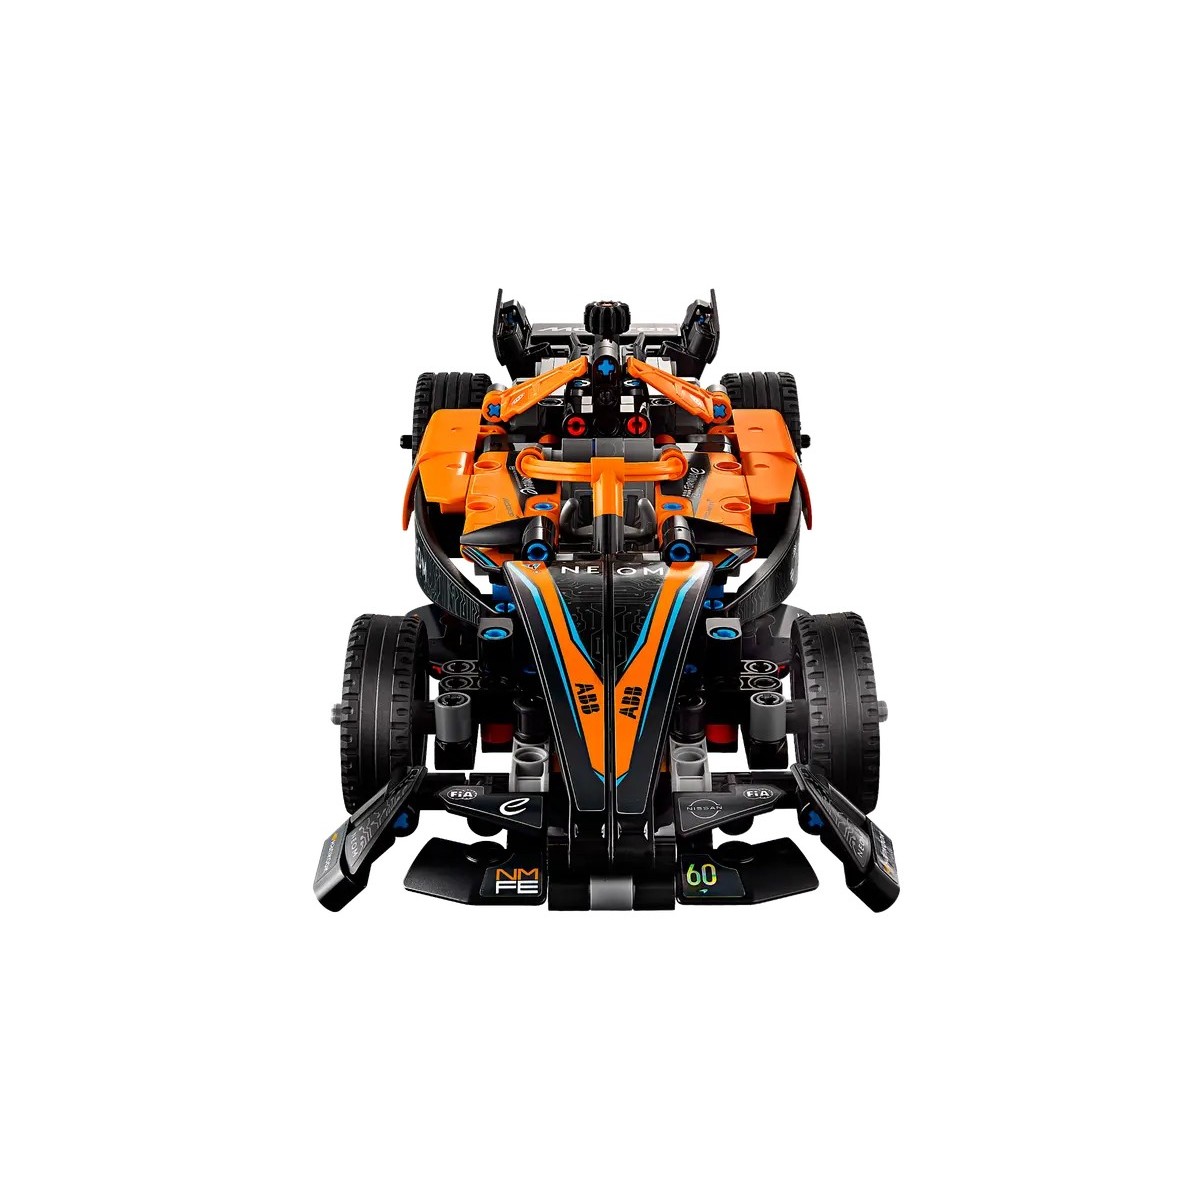 LEGO TECHNIC NEOM MCLAREN FORMULA E RACE CAR /42169/ posledný kus